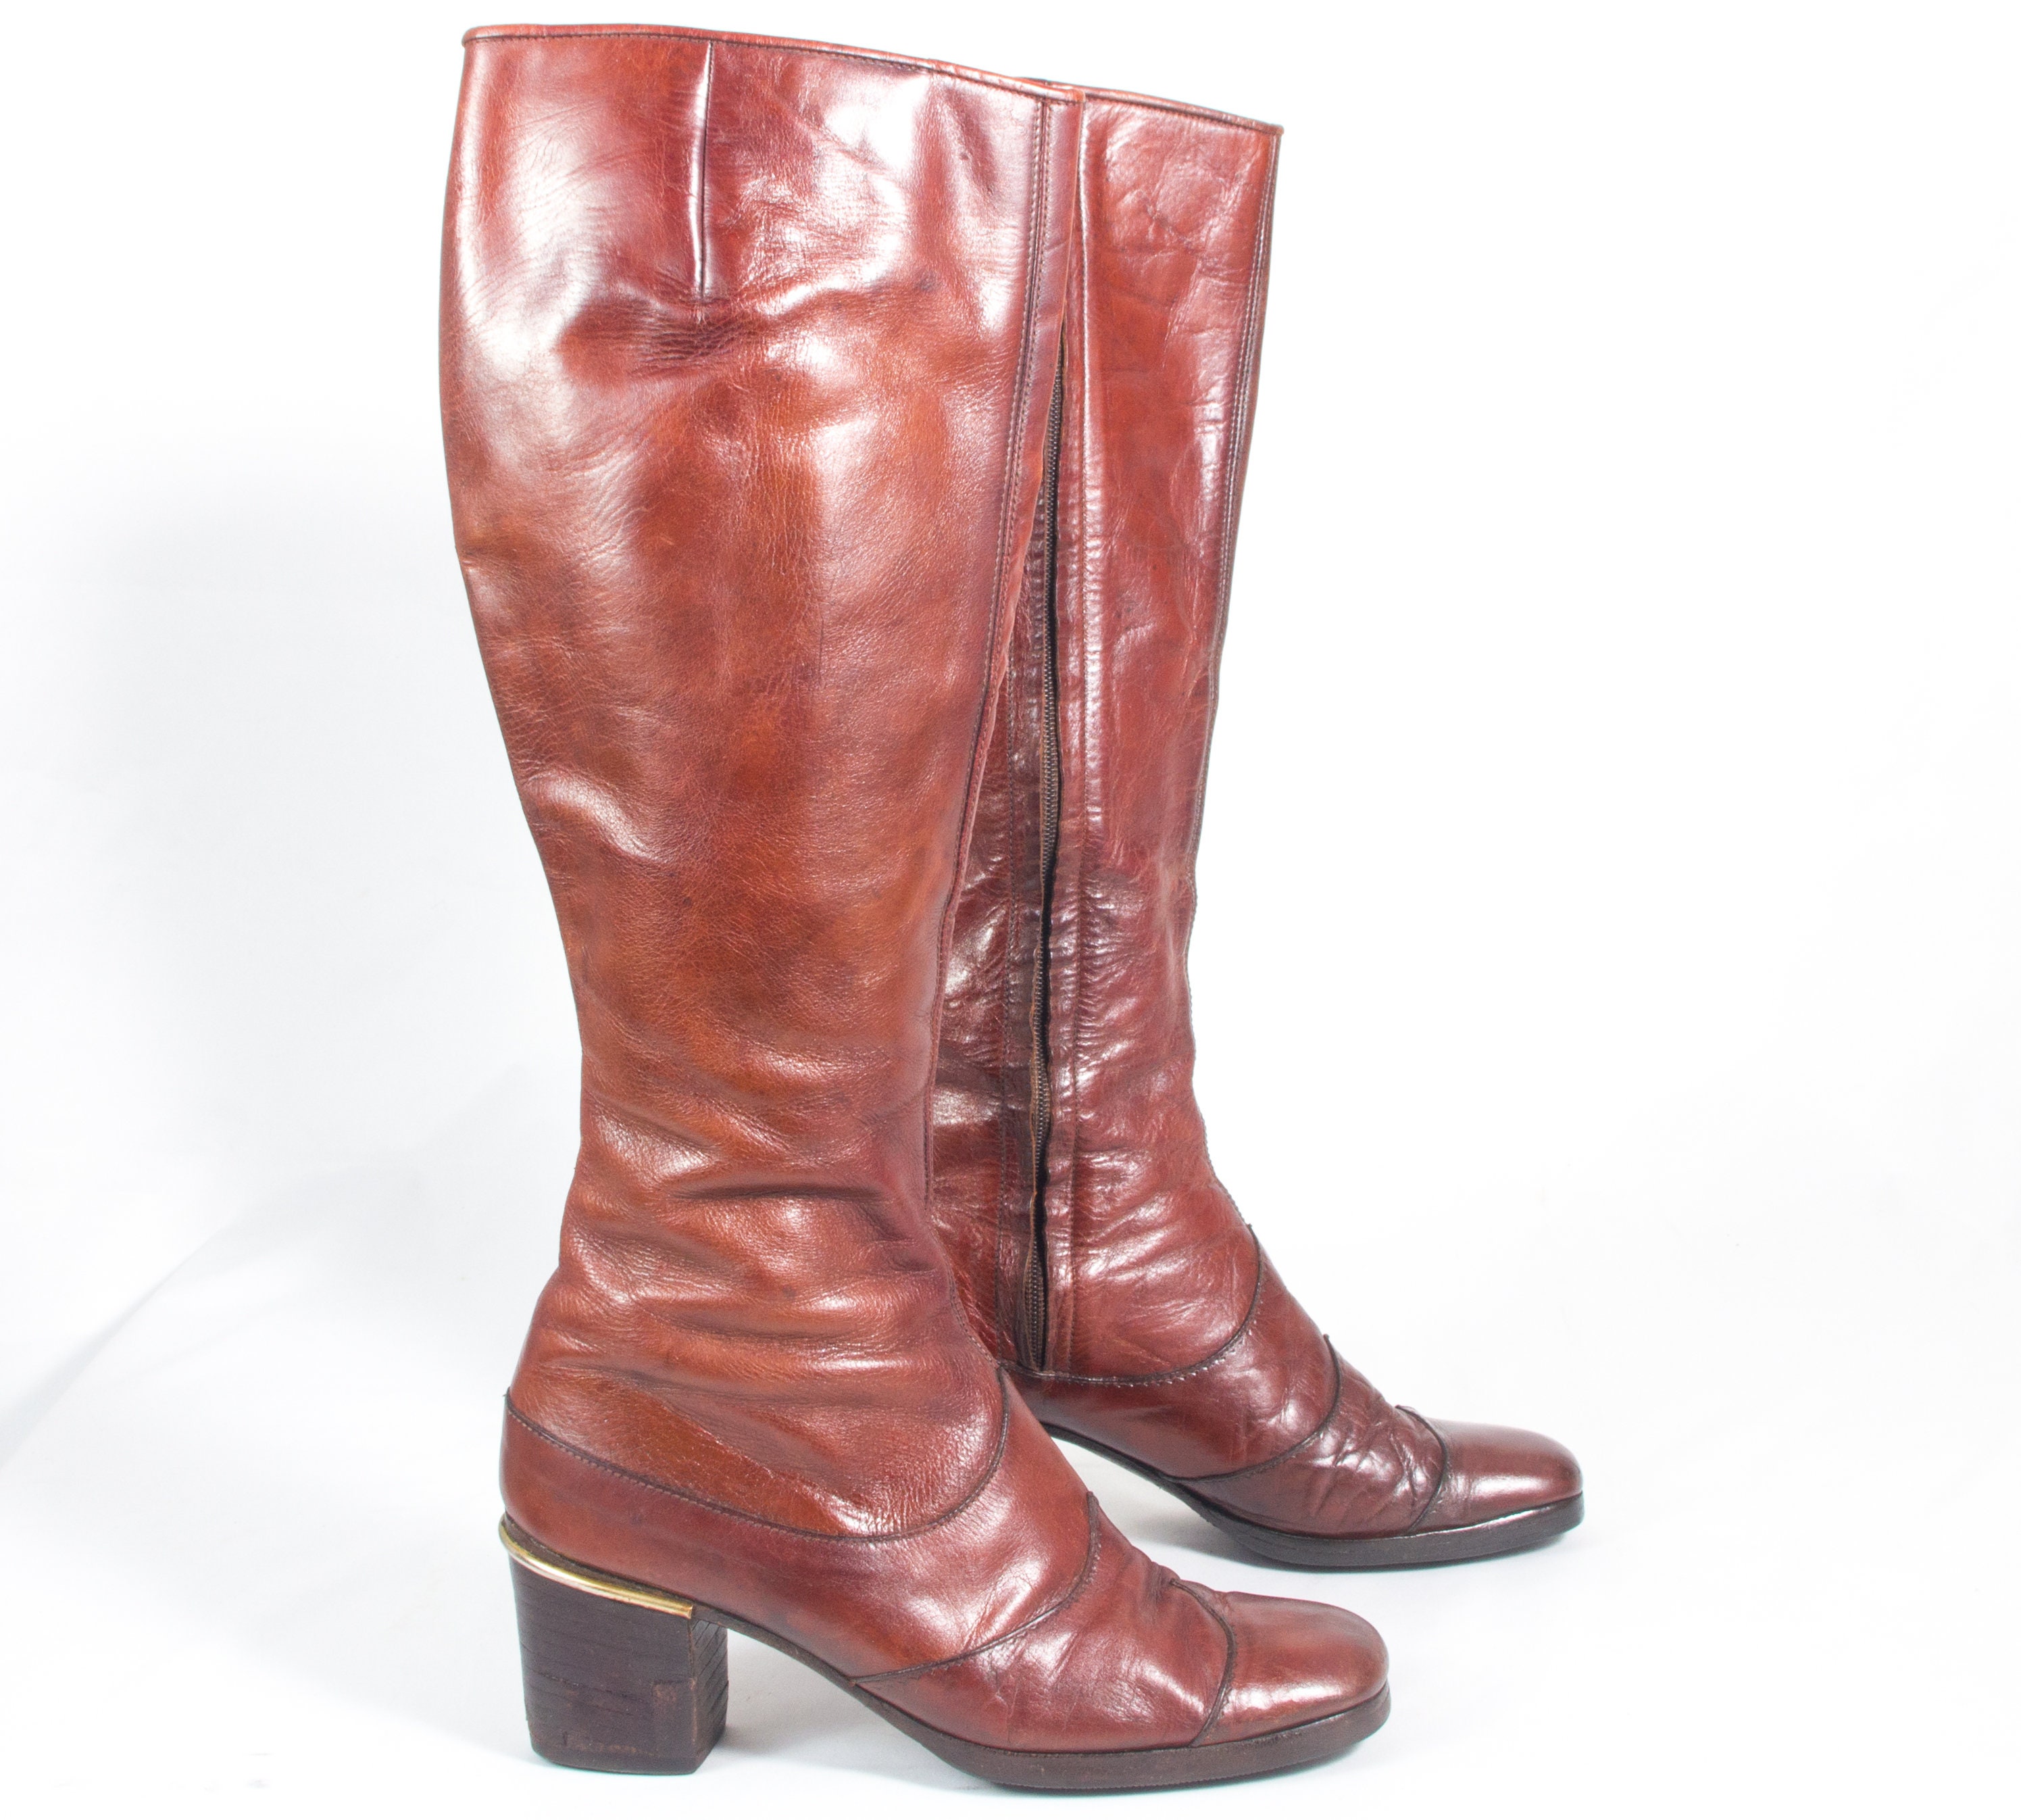 VTG 60's Size 6 1/2 Women's Retro Knee High Boots | Etsy